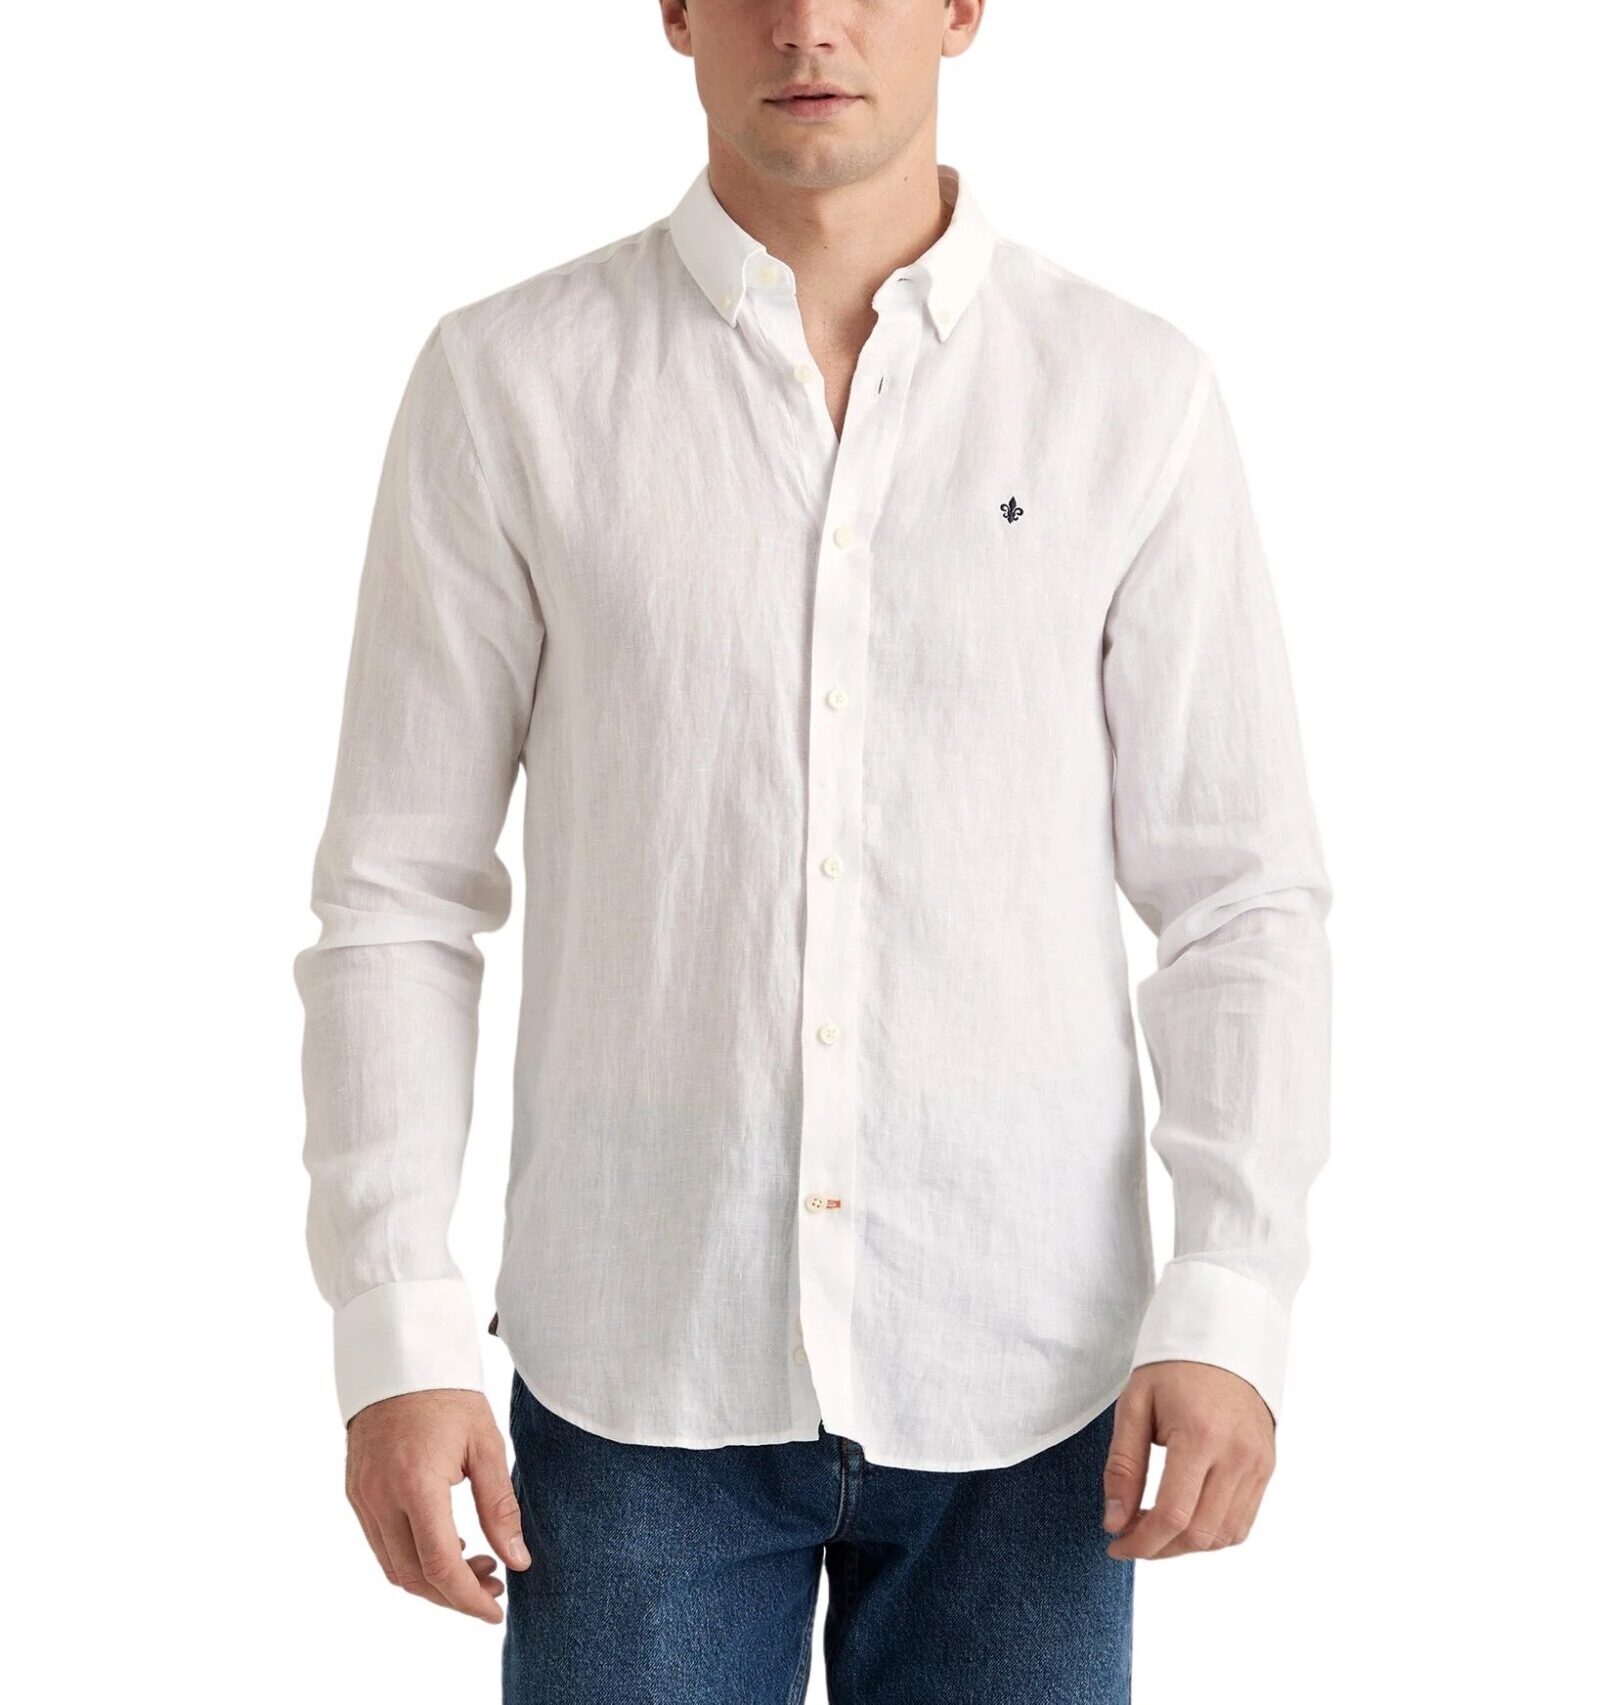 1144_b6e3c69c44-801500-douglas-bd-linen-shirt-ls-01-white-1-full